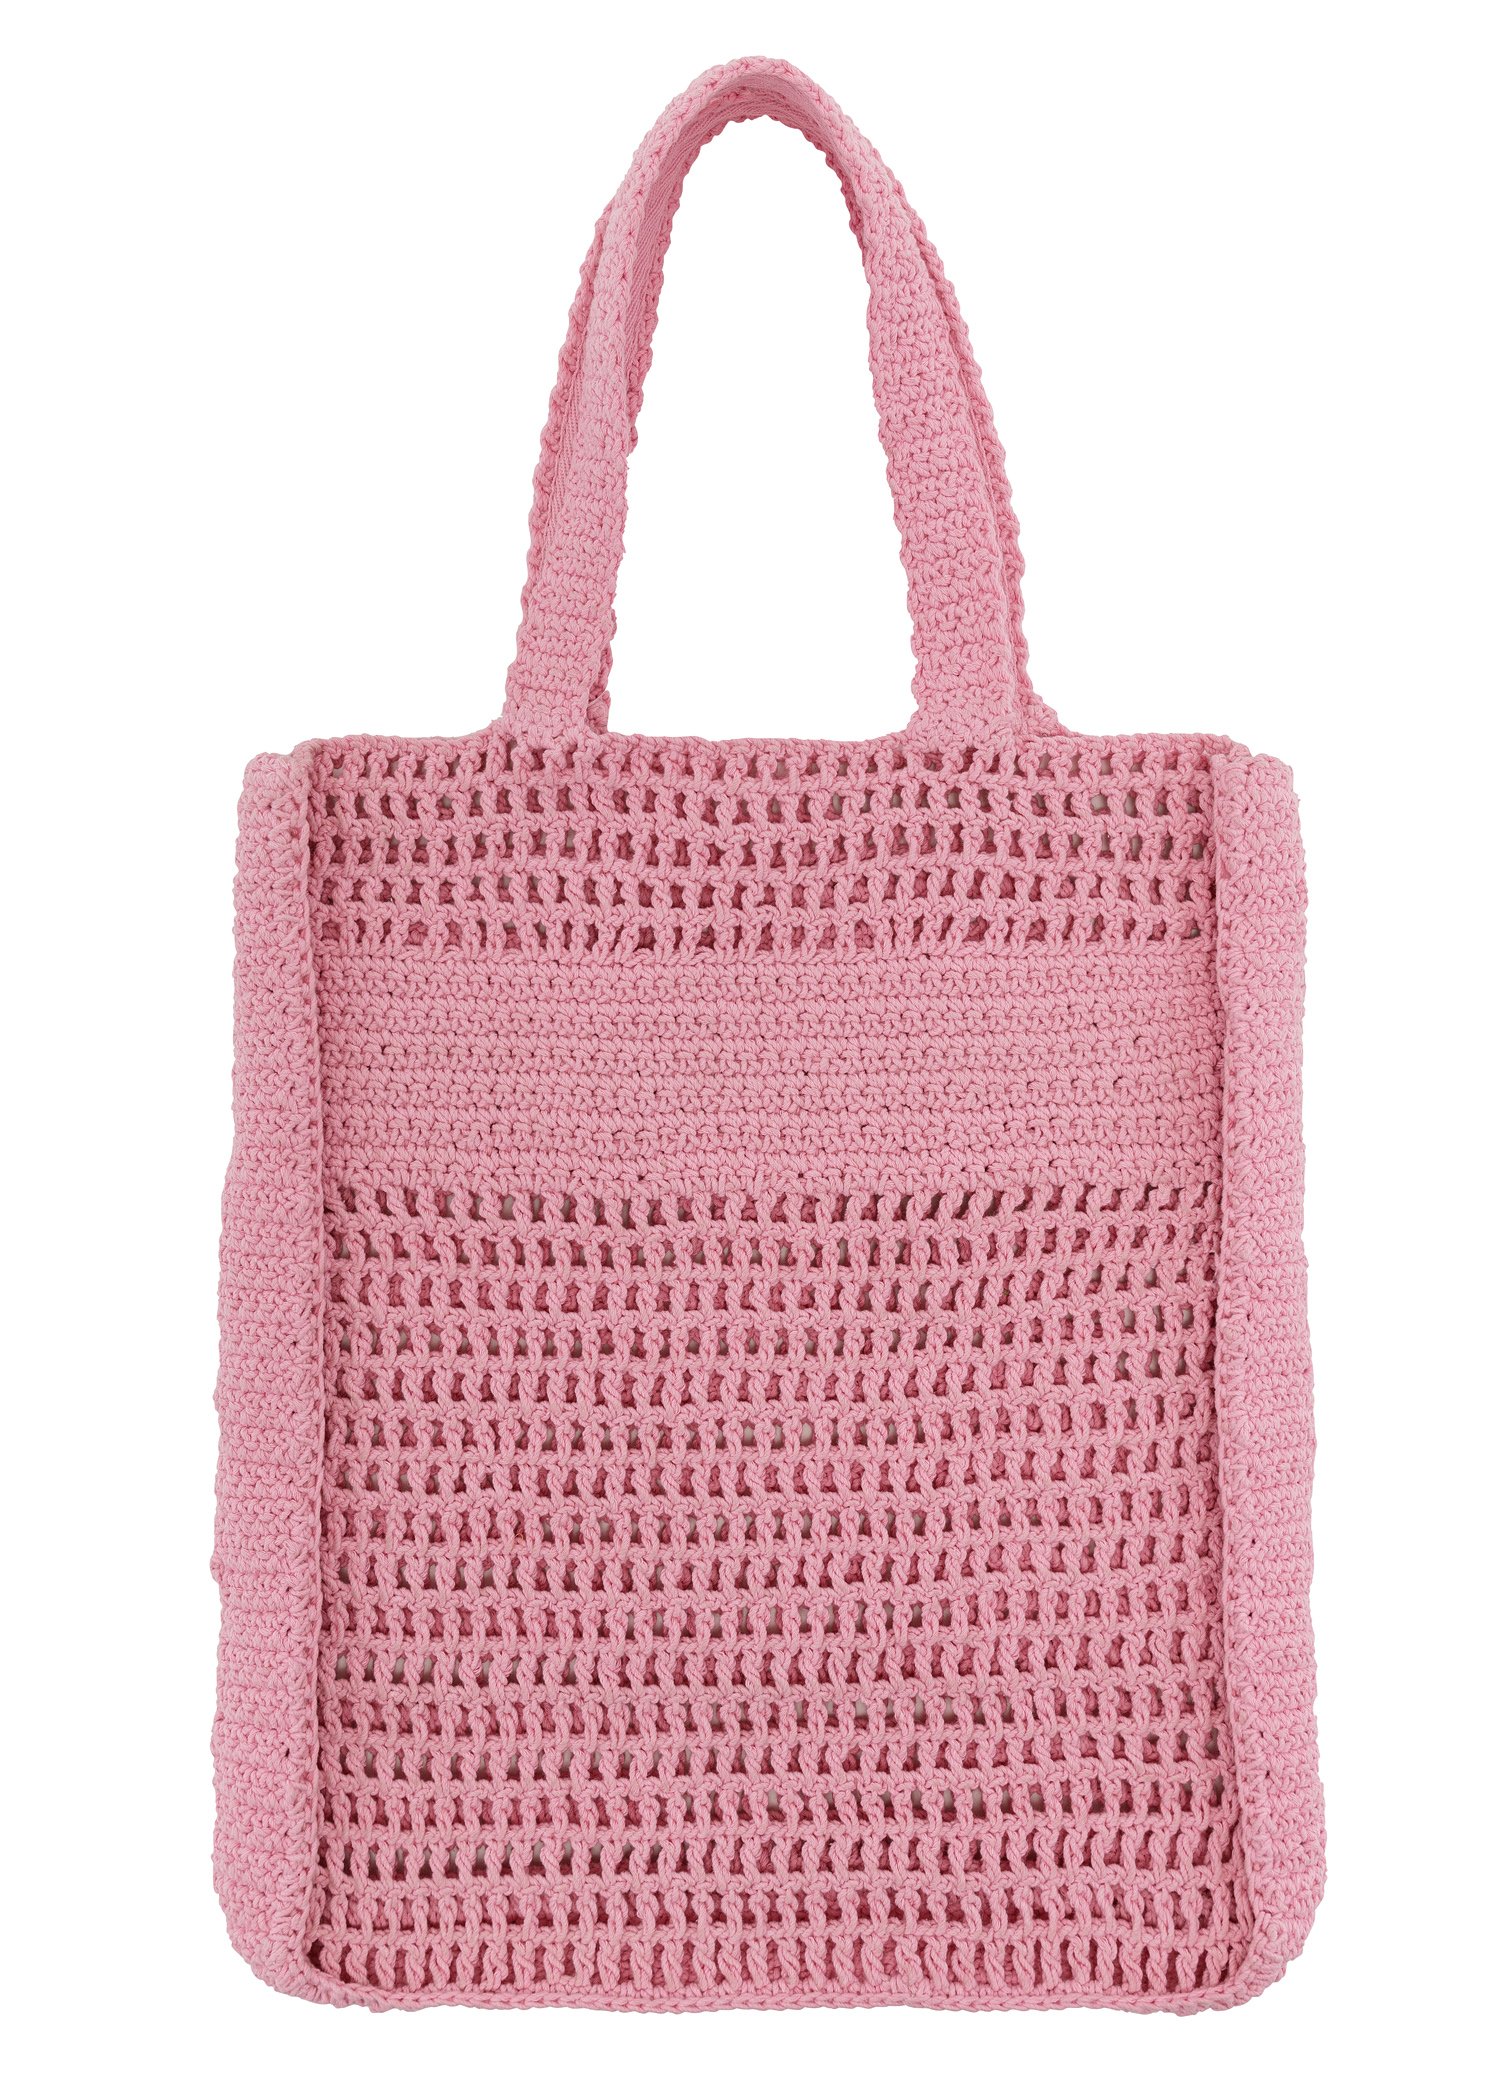 Hand knitted crochet bag Image 2